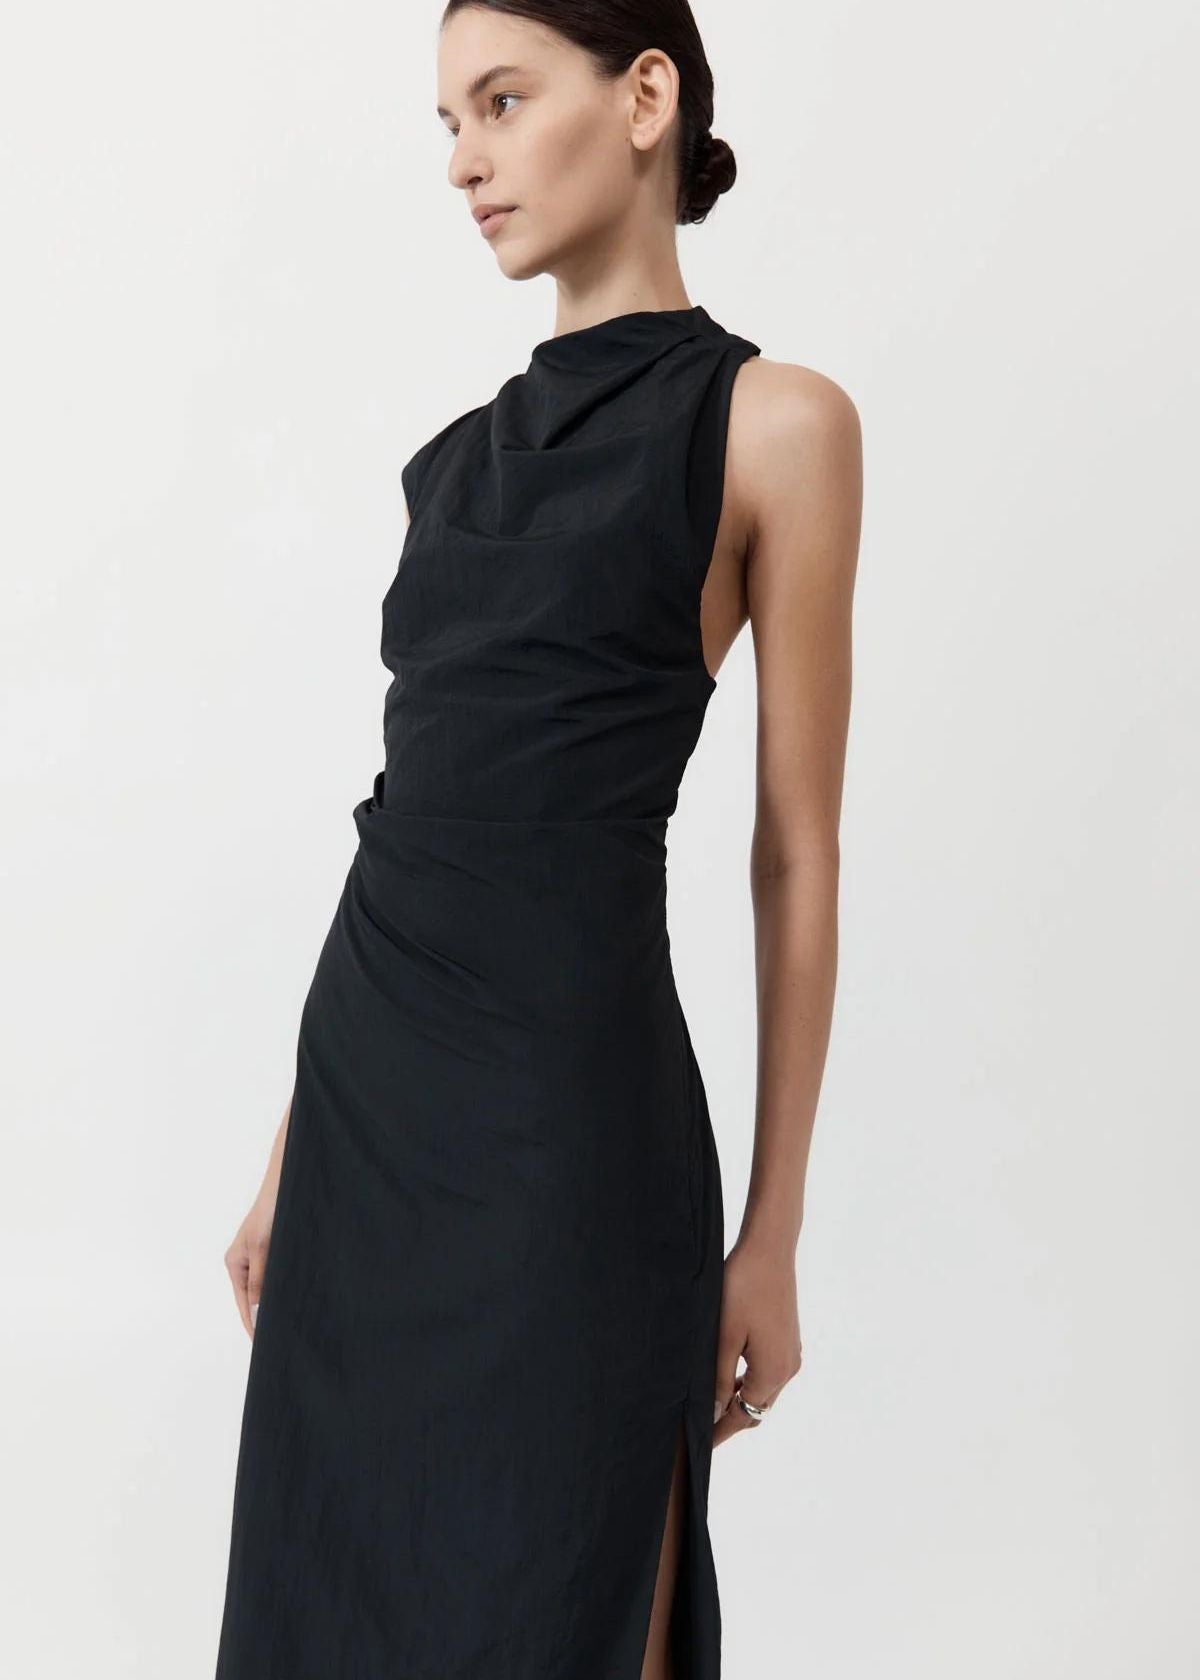 ST. AGNI Asymmetrical Tuck Dress - Black